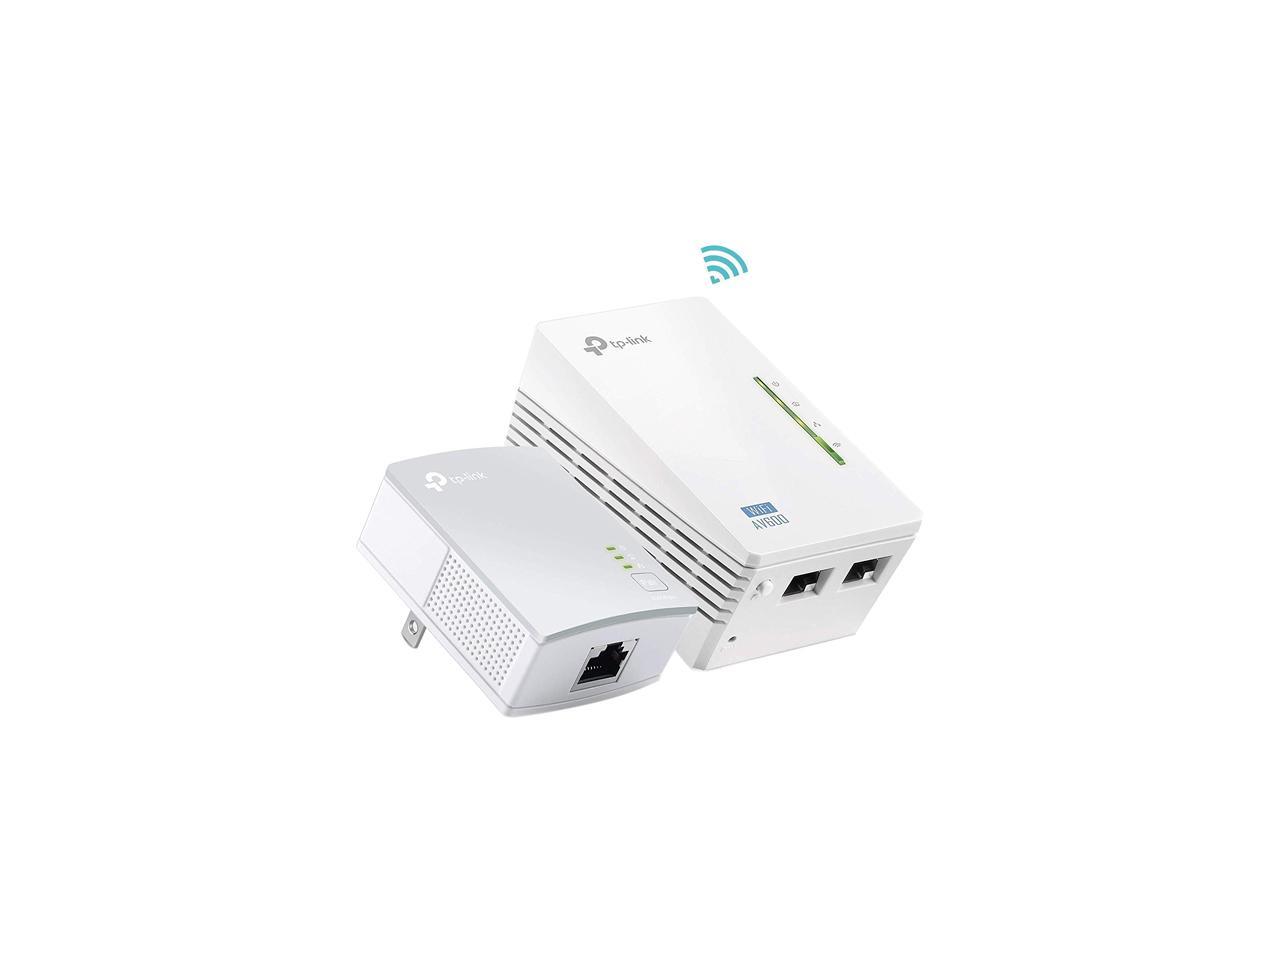 TP-Link AV600 Powerline WiFi Extender - Powerline Adapter with N300 WiFi, Power Saving, Ethernet over Power(TL-WPA4220 KIT)